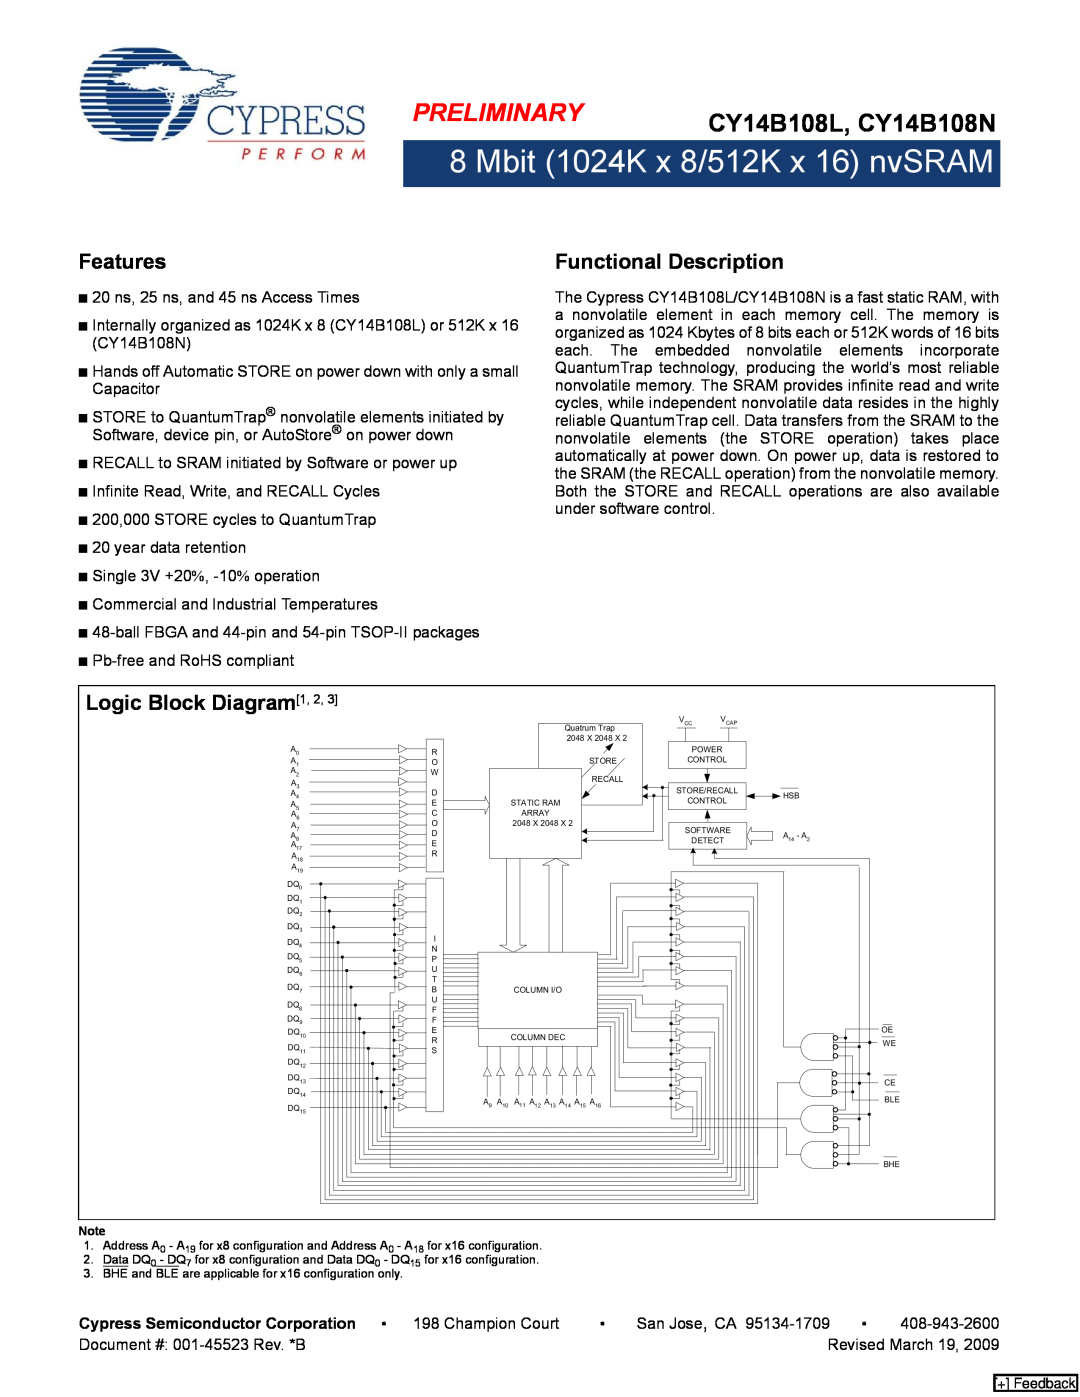 Cypress manual Preliminary, CY14B108L, CY14B108N, Features, Functional Description, Logic Block Diagram1 